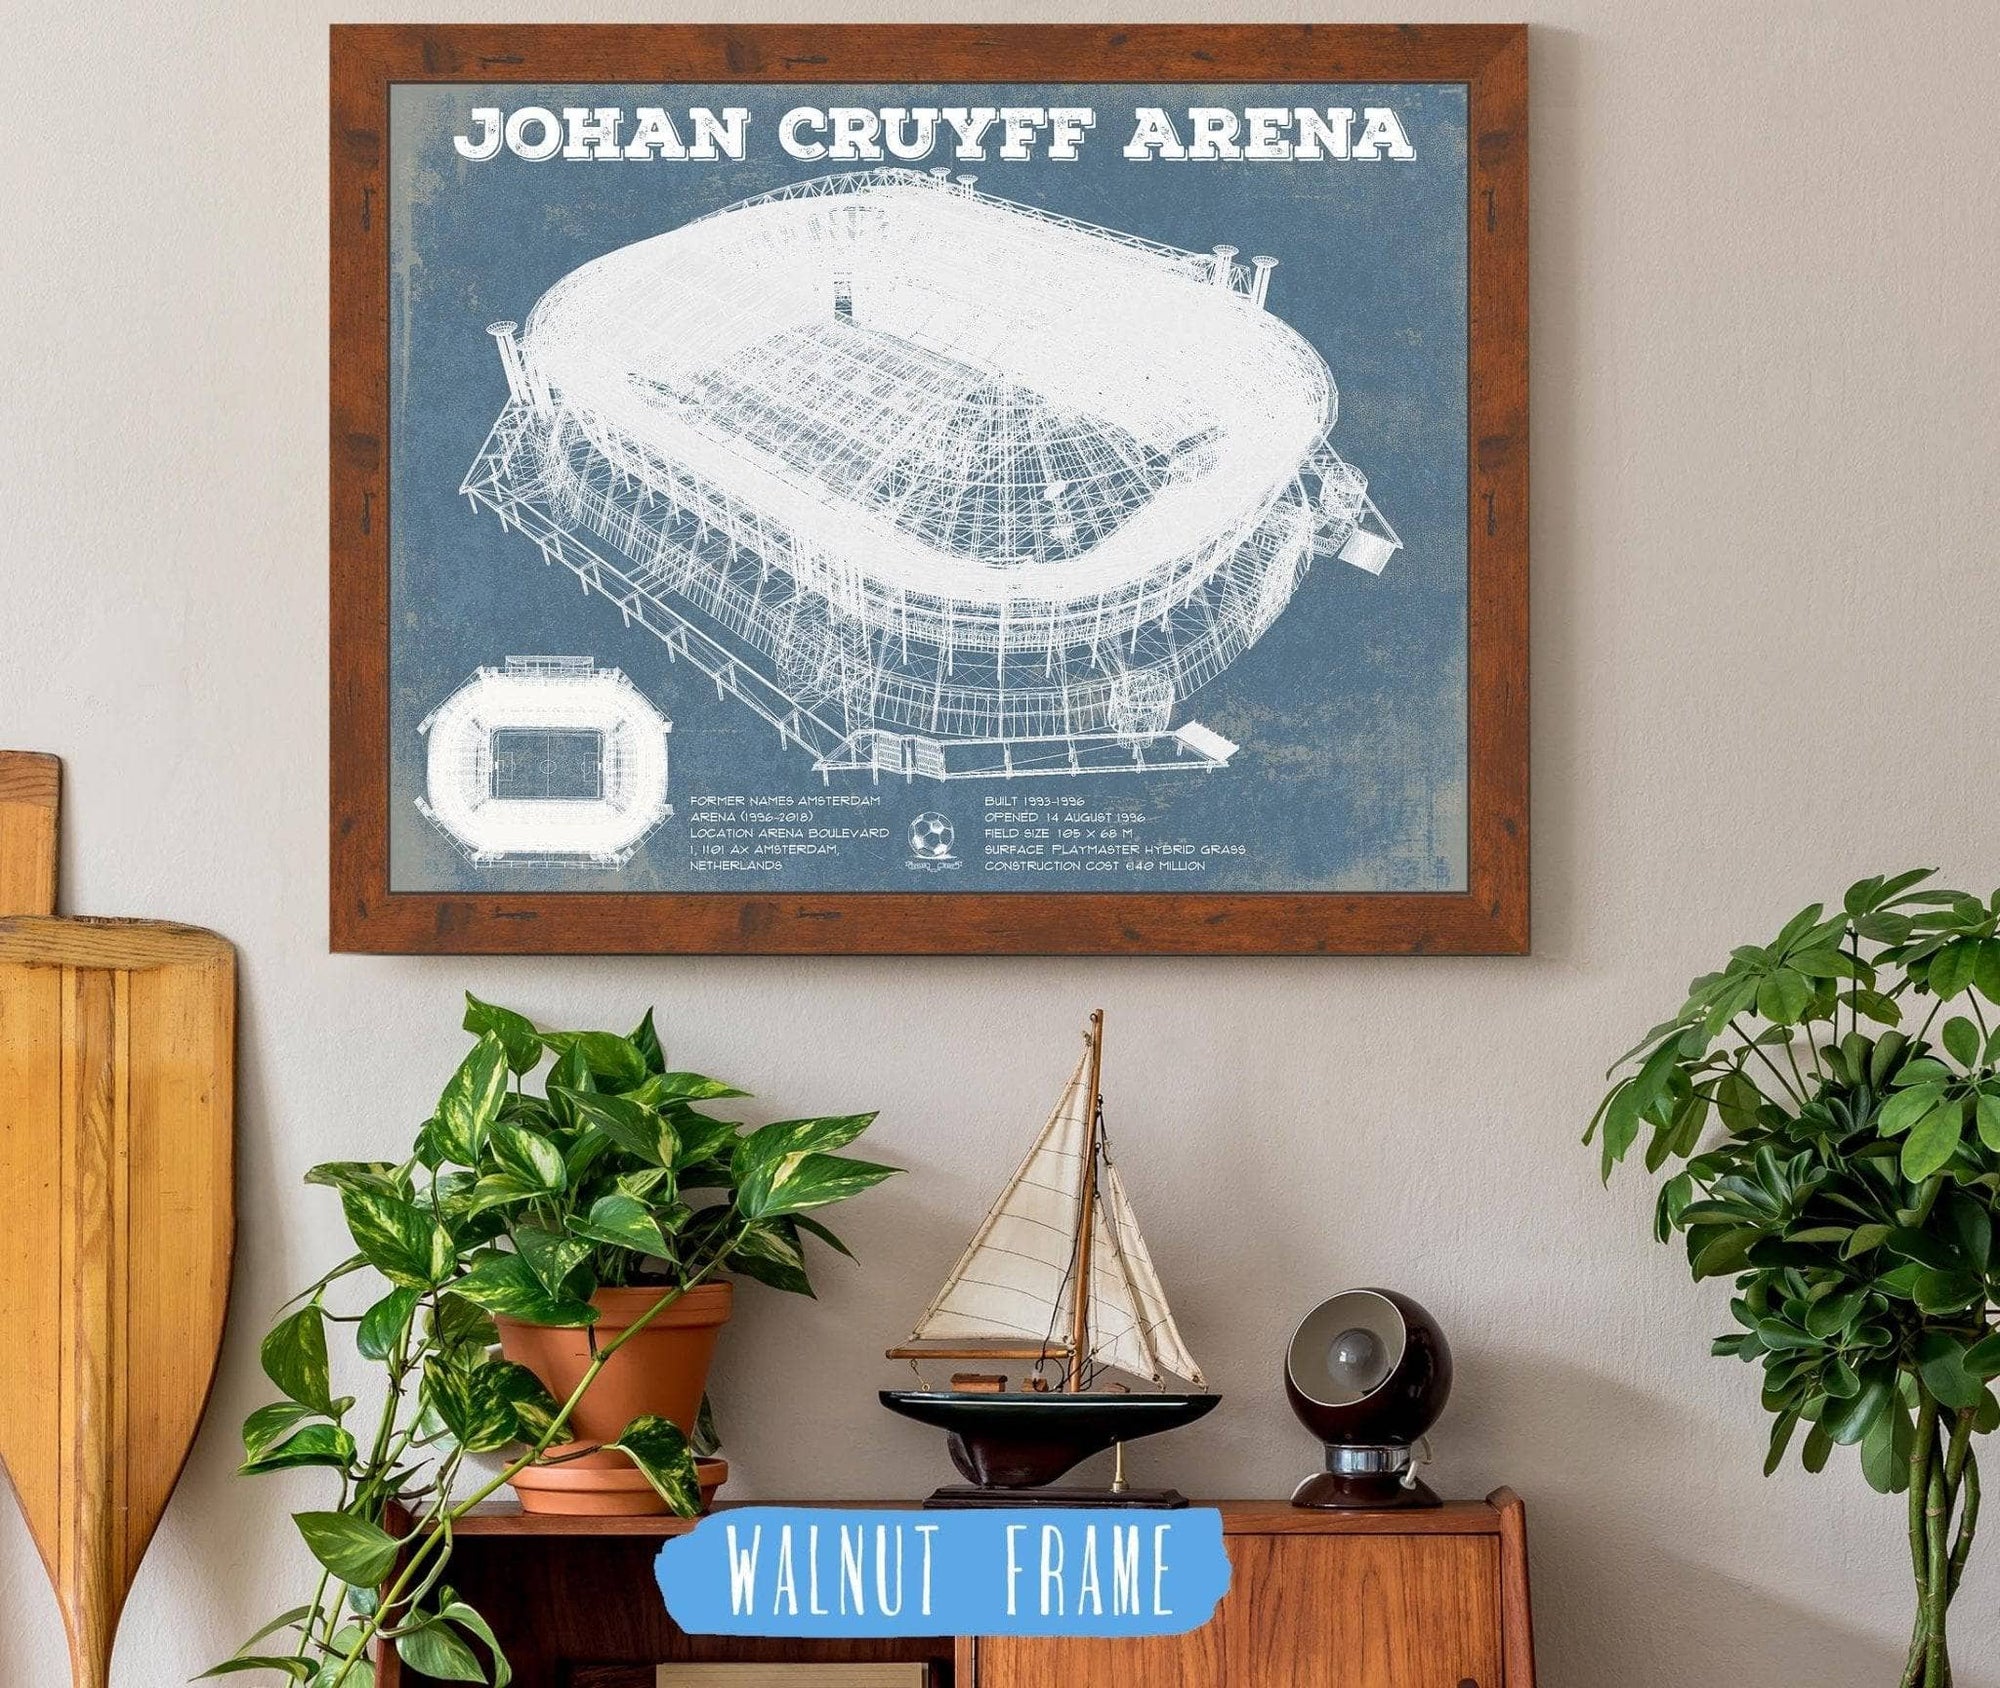 Cutler West Soccer Collection AFC Ajax FC Johan Cruyff Arena Soccer Print